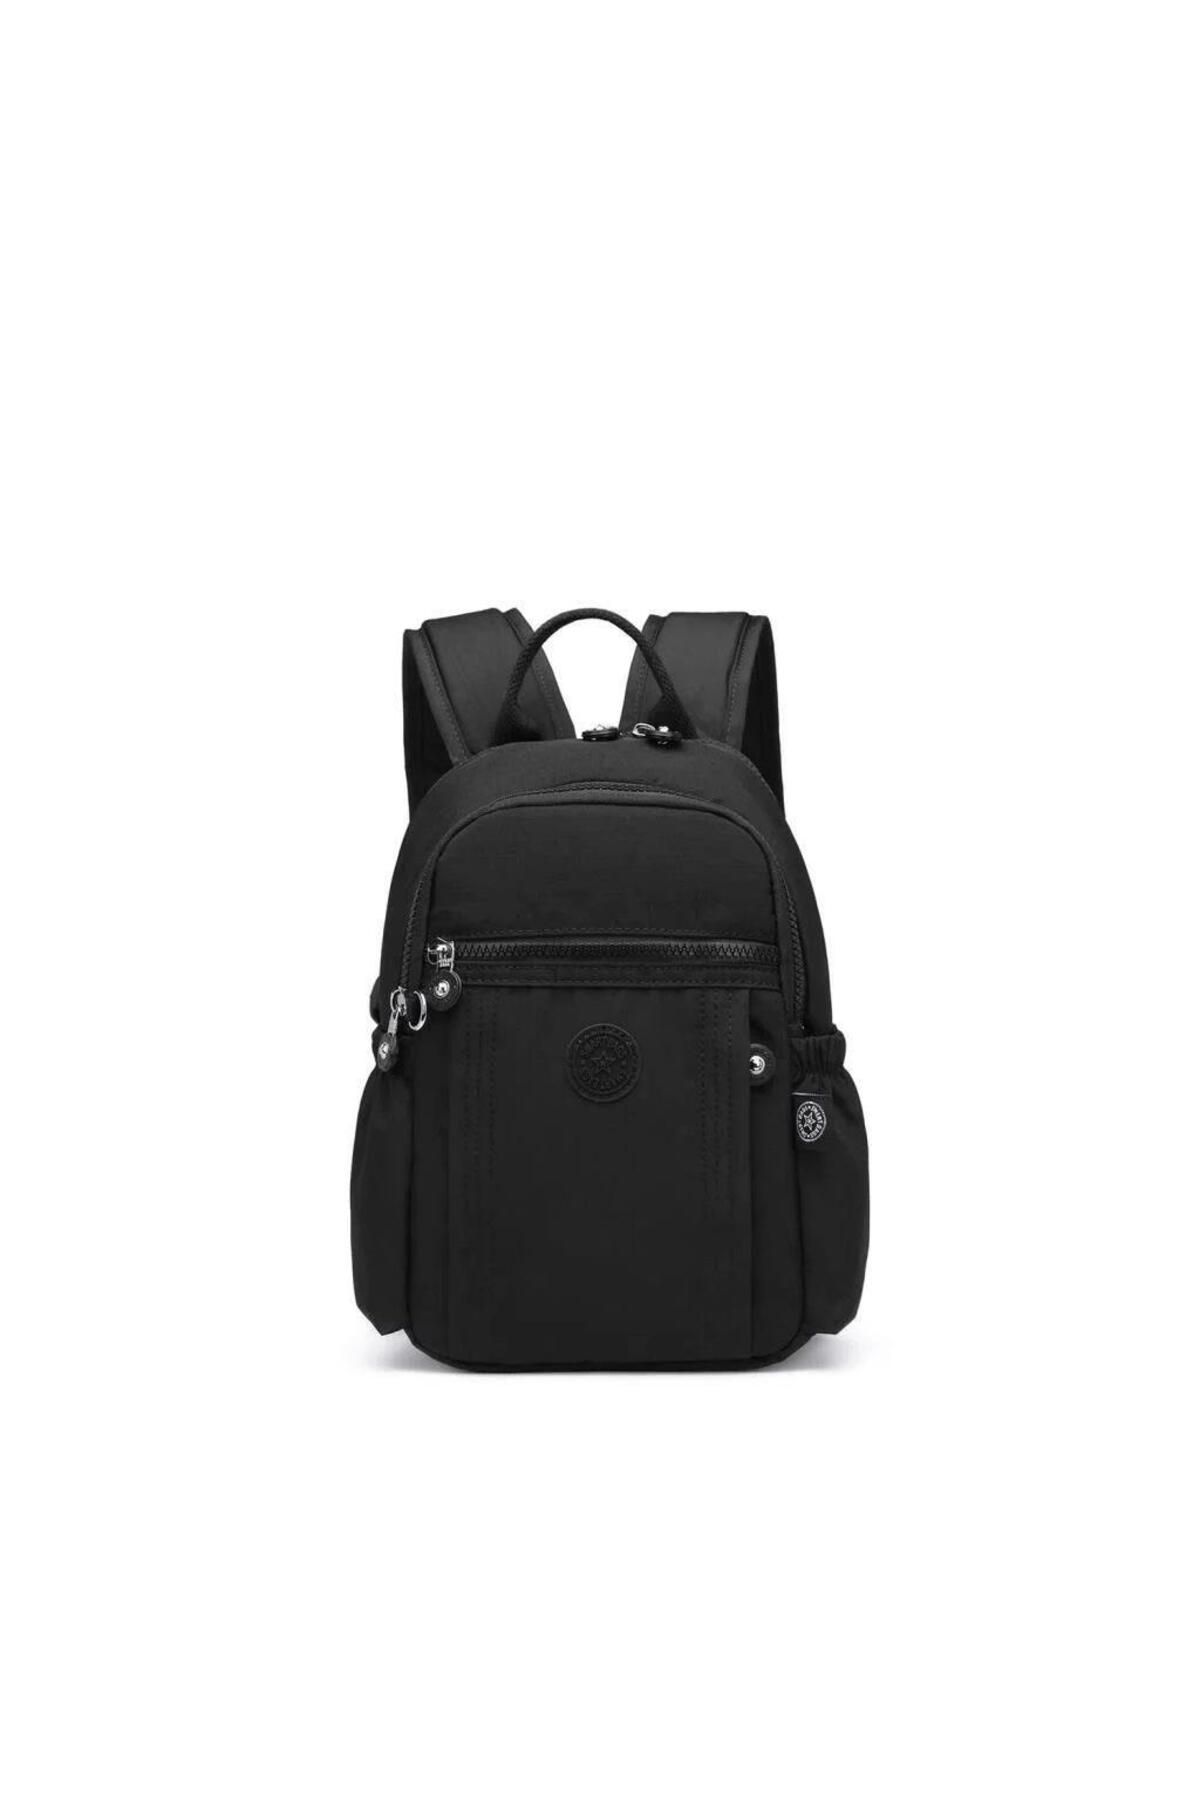 Smart Bags 3179 Sırt Çantası Siyah